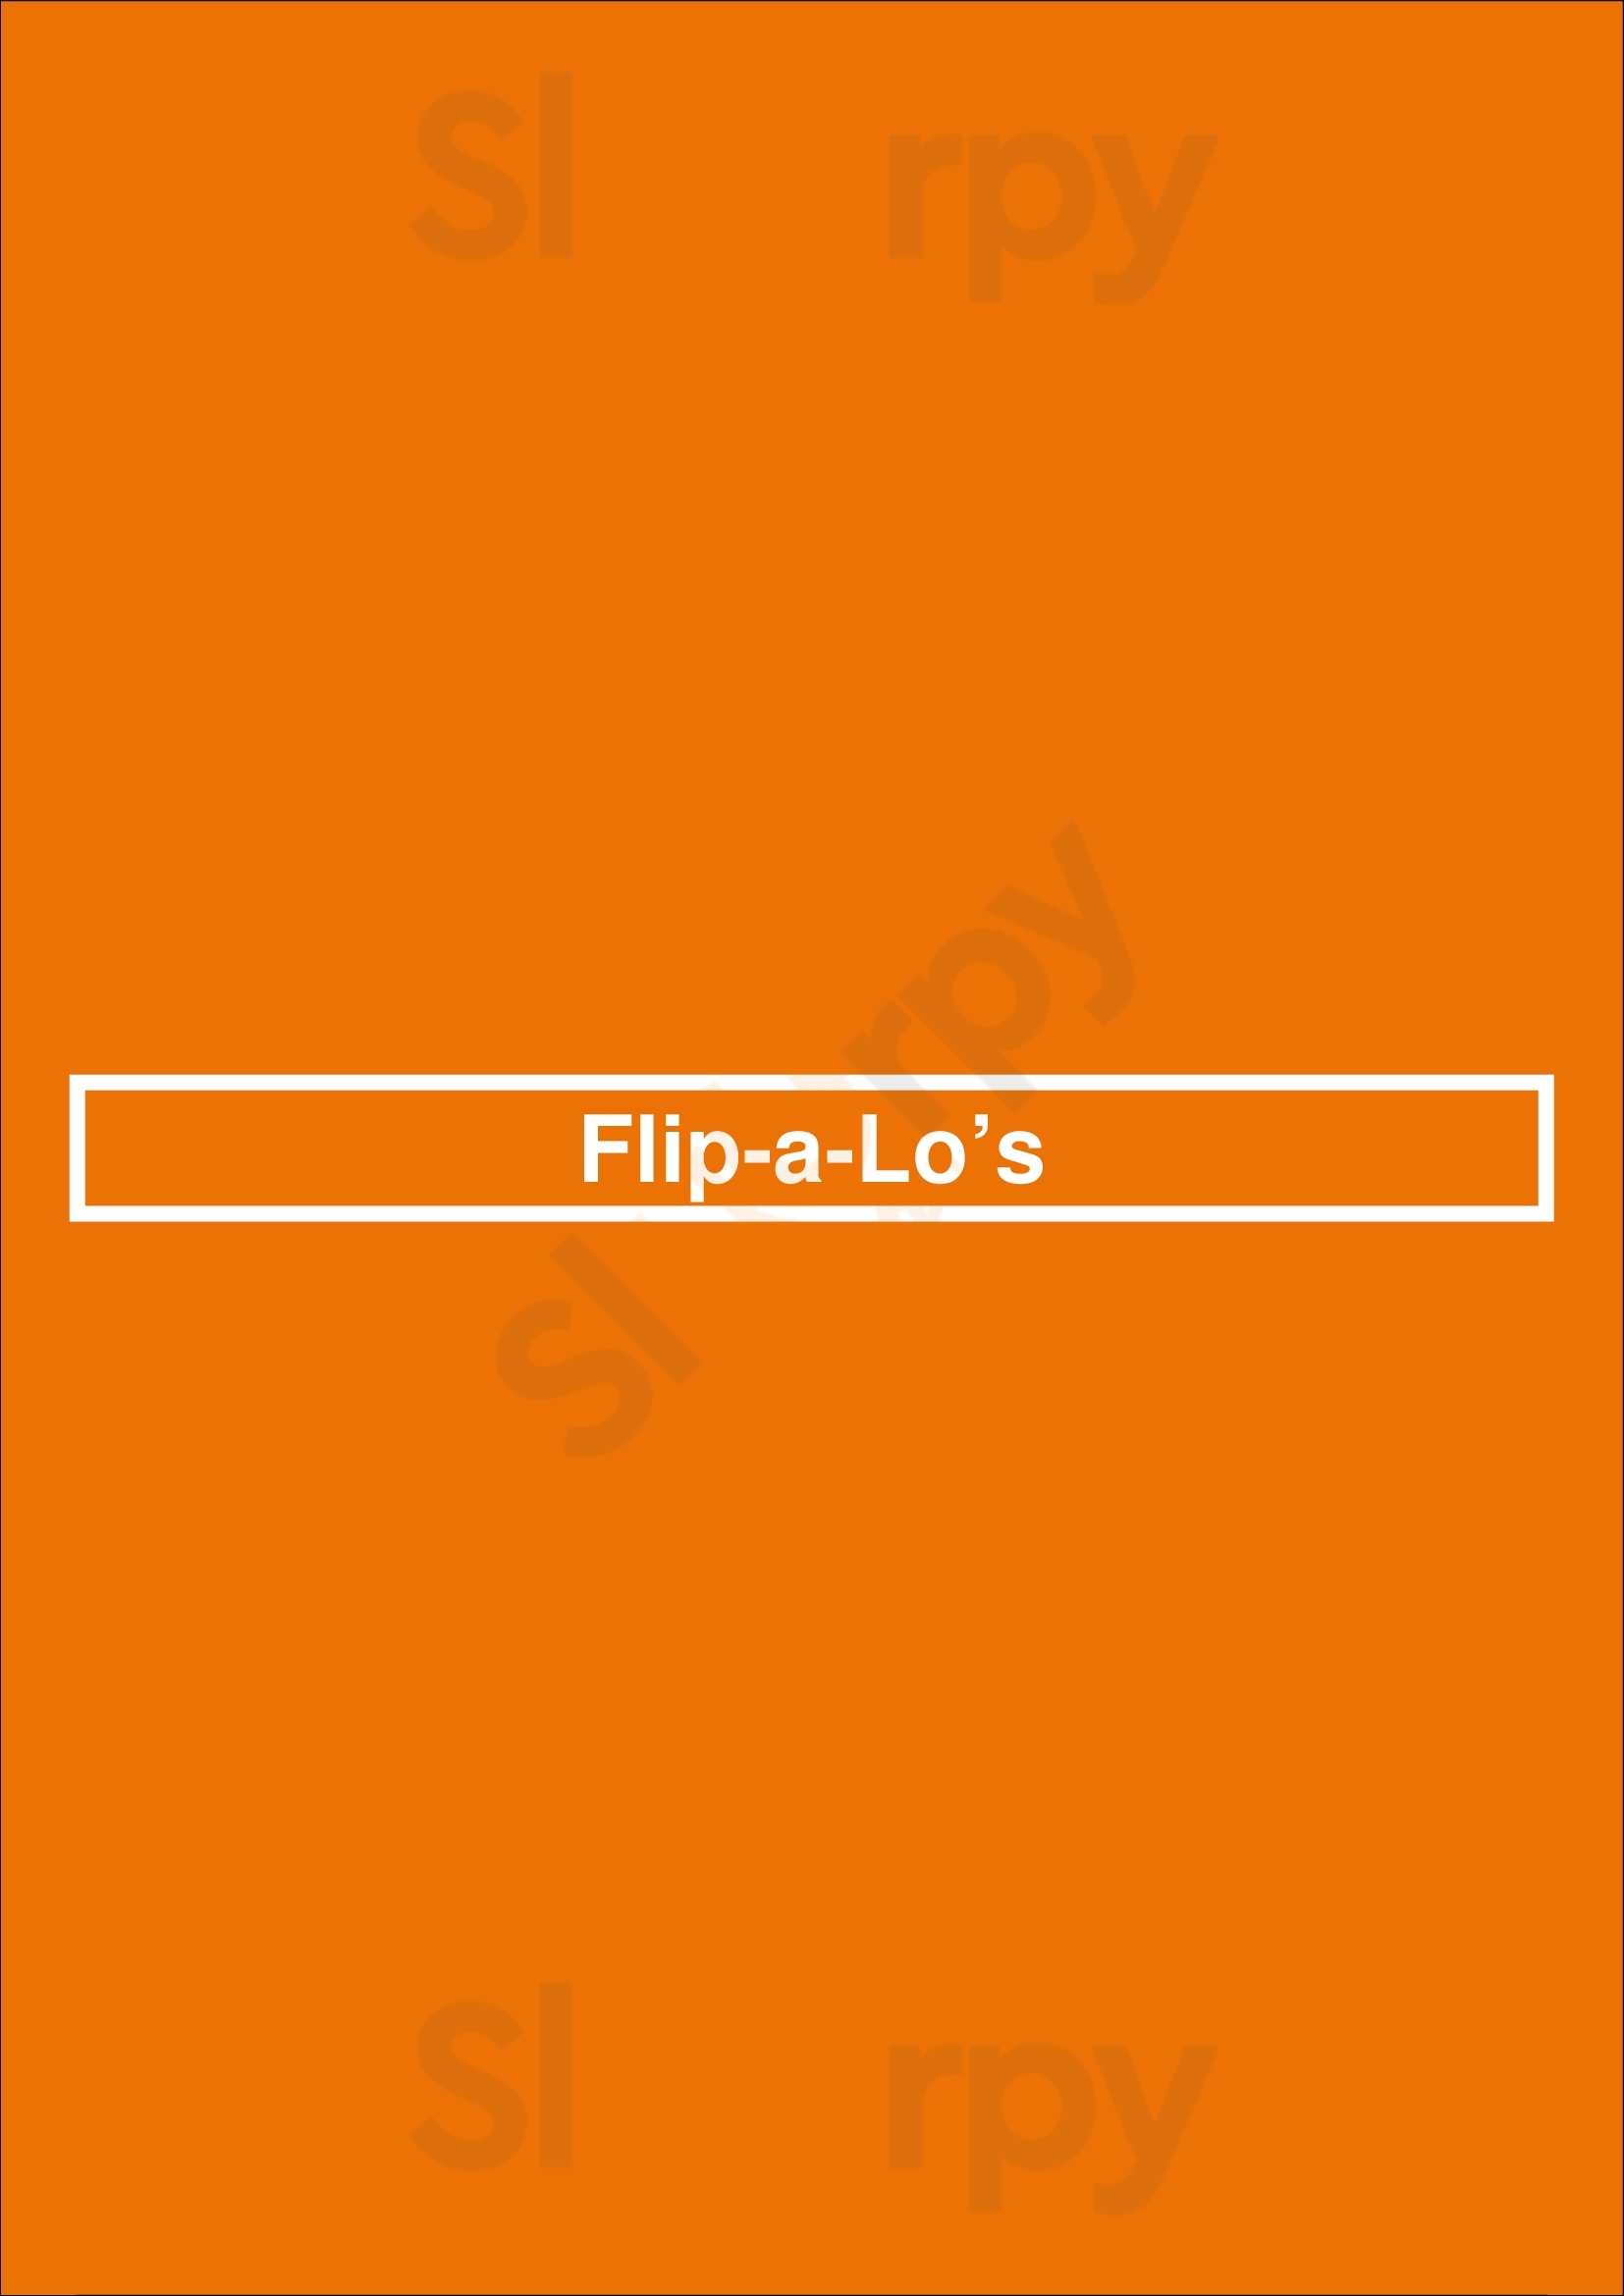 Flip-a-lo’s Charlotte Menu - 1